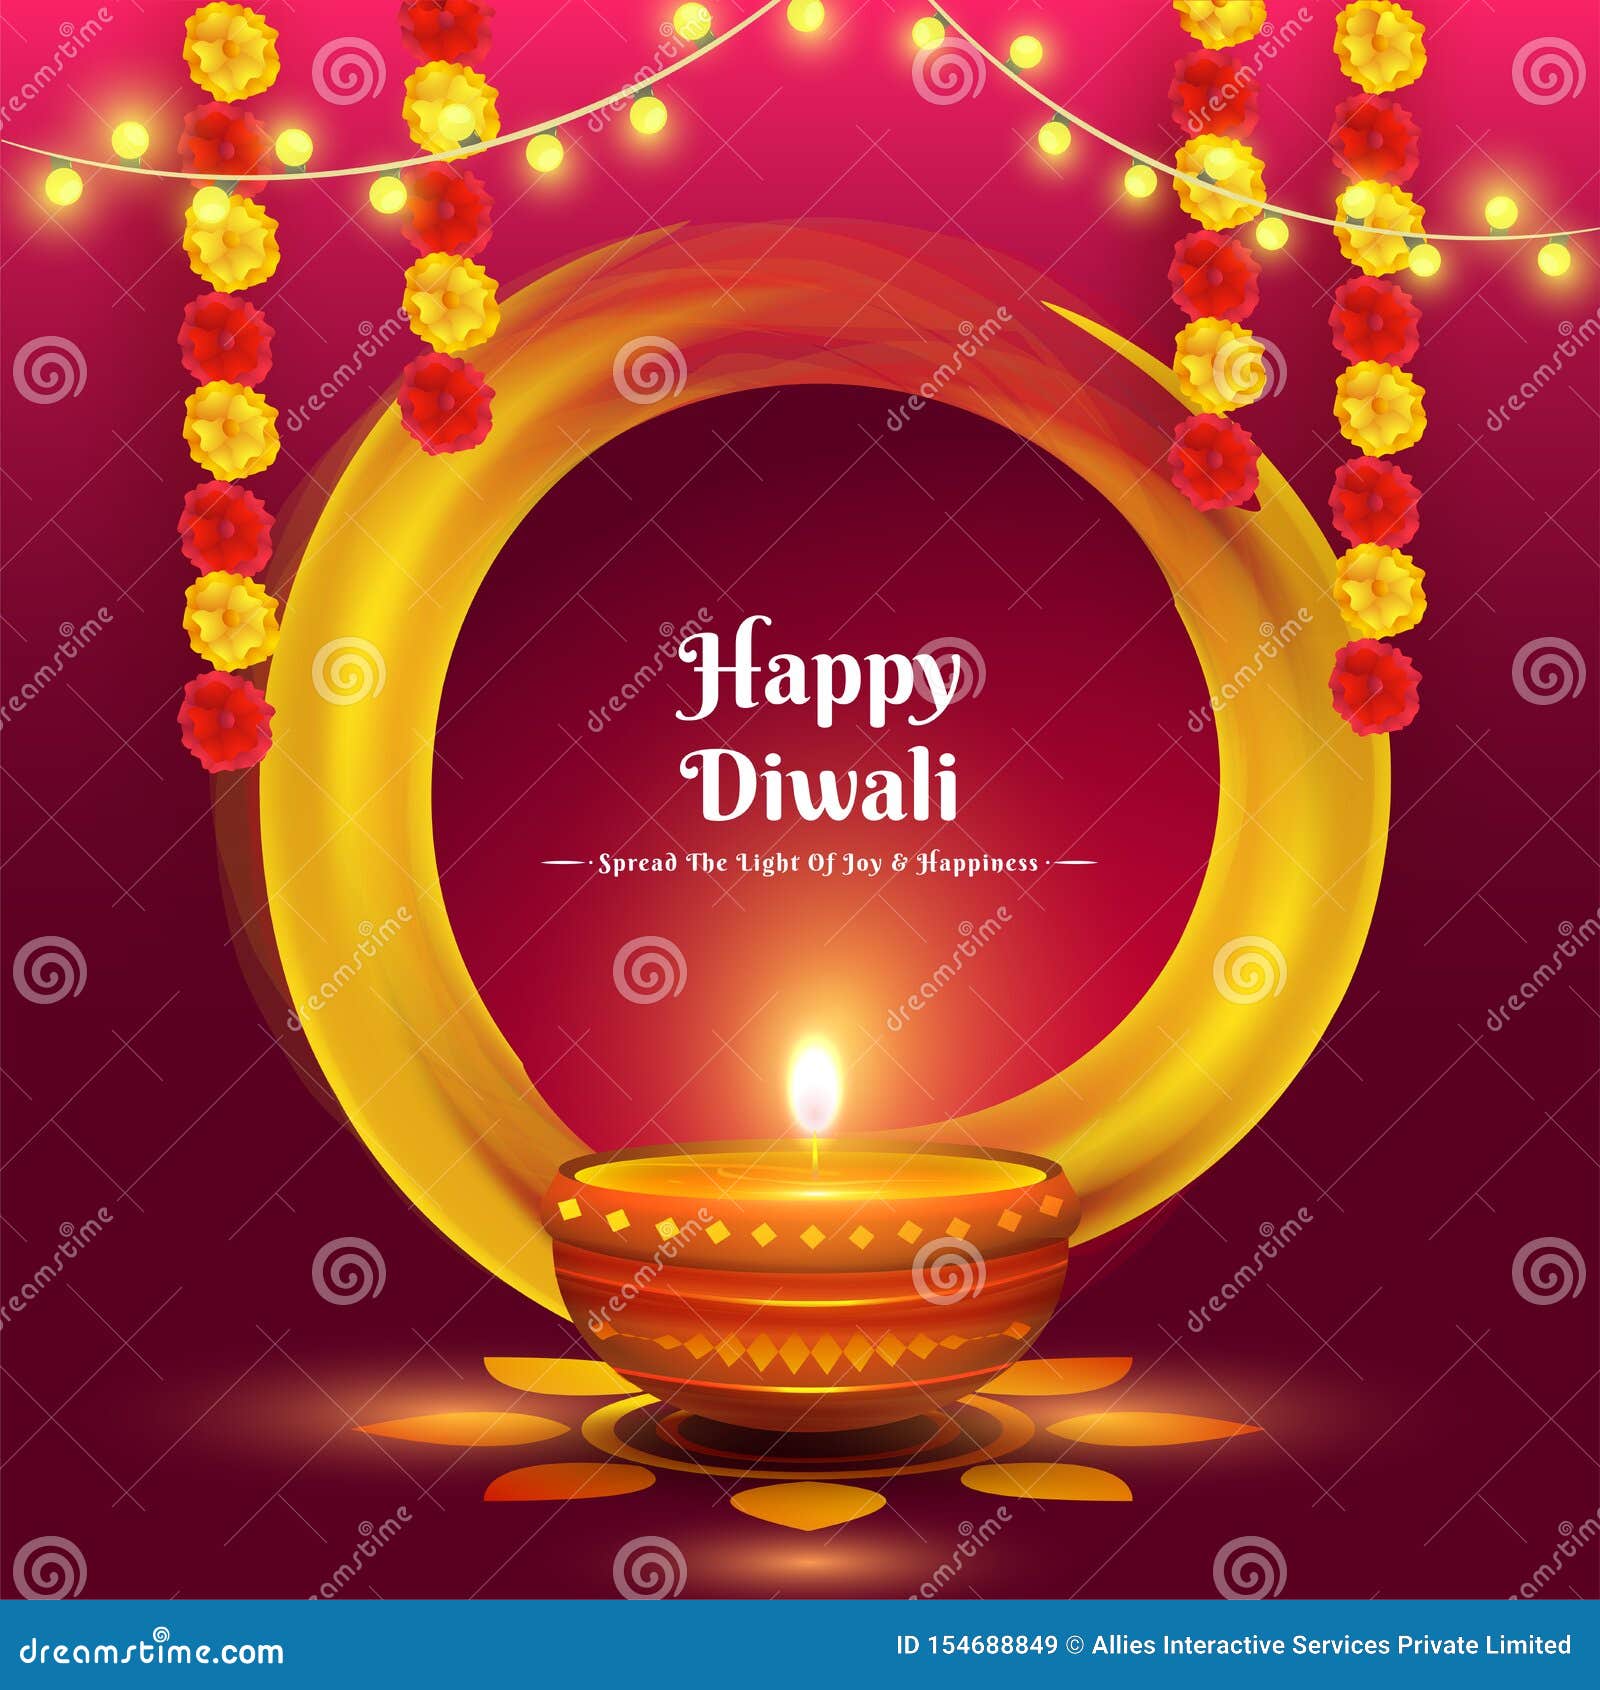 Happy Diwali Poster or Banner Design with Illustration of Oil Lamp. Stock  Illustration - Illustration of background, card: 154688849